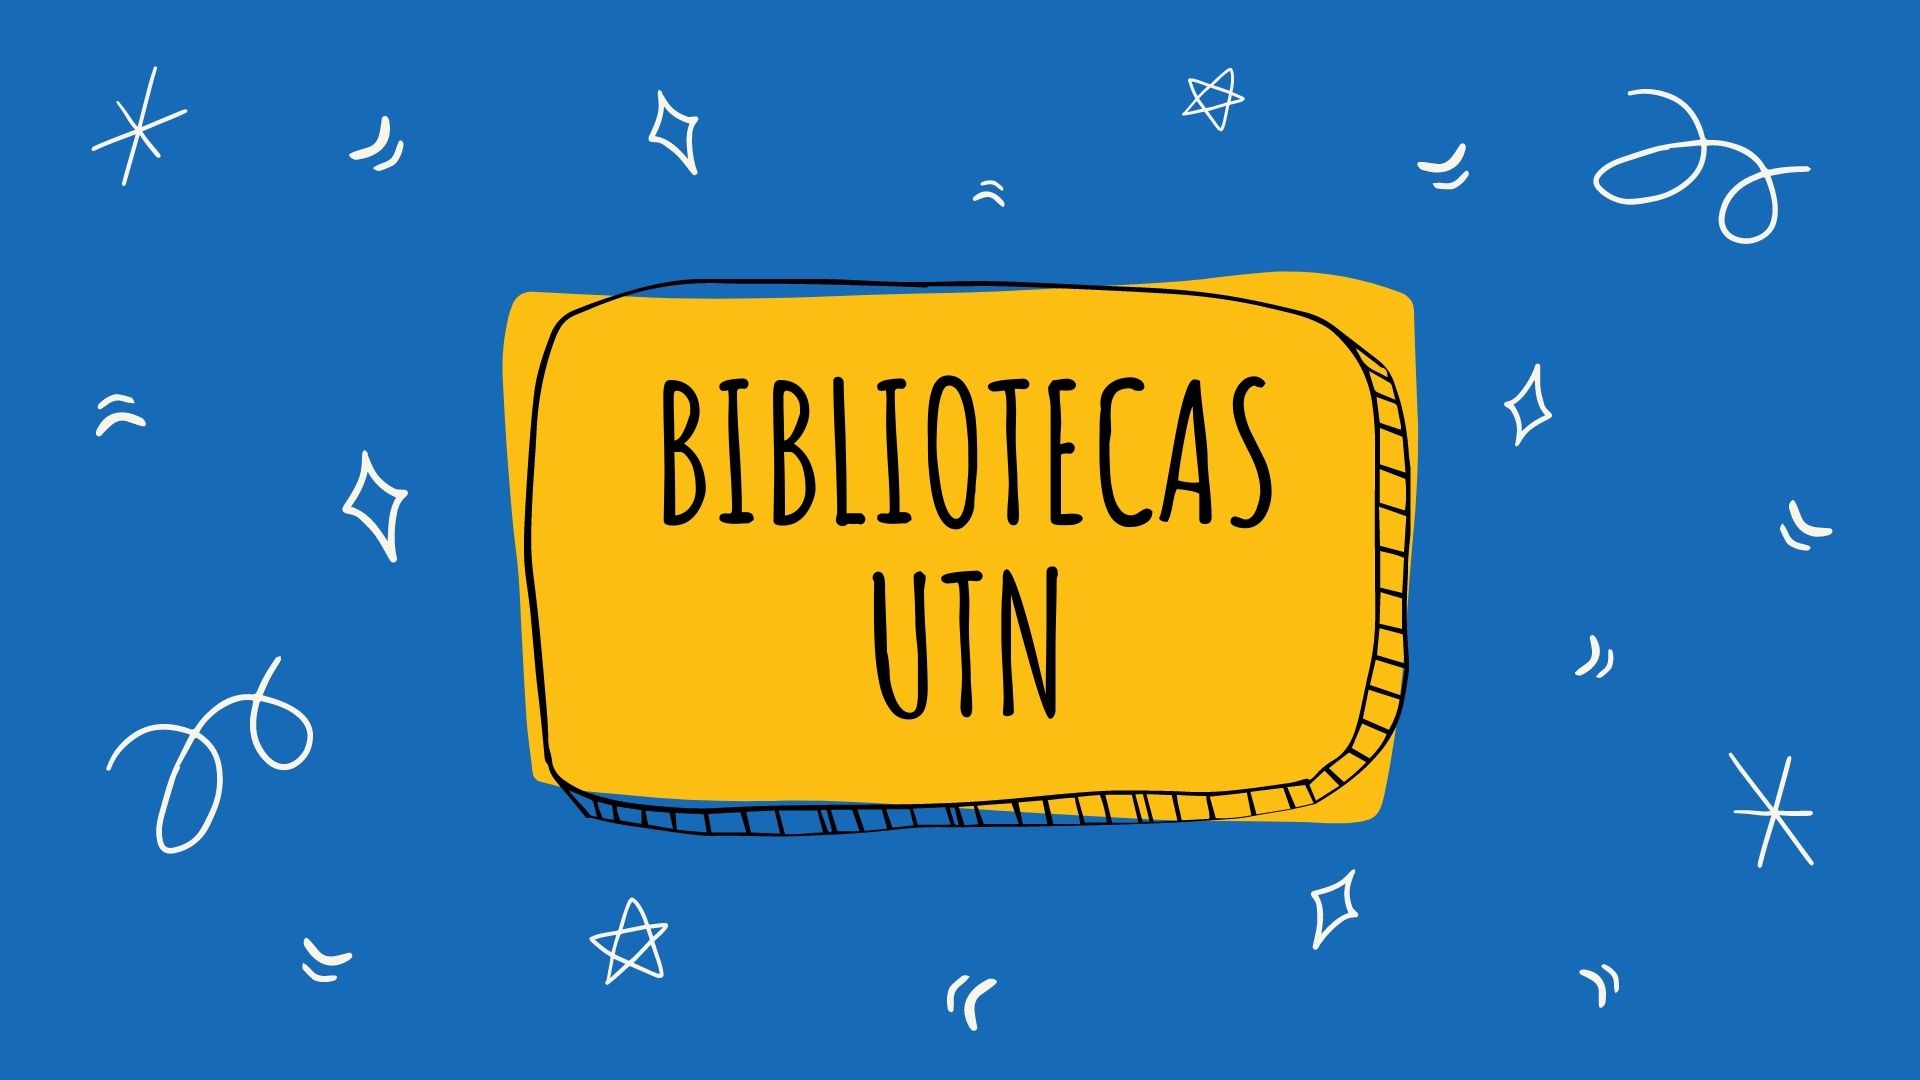 Bibliotecas-Utn---9-6-21.jpg